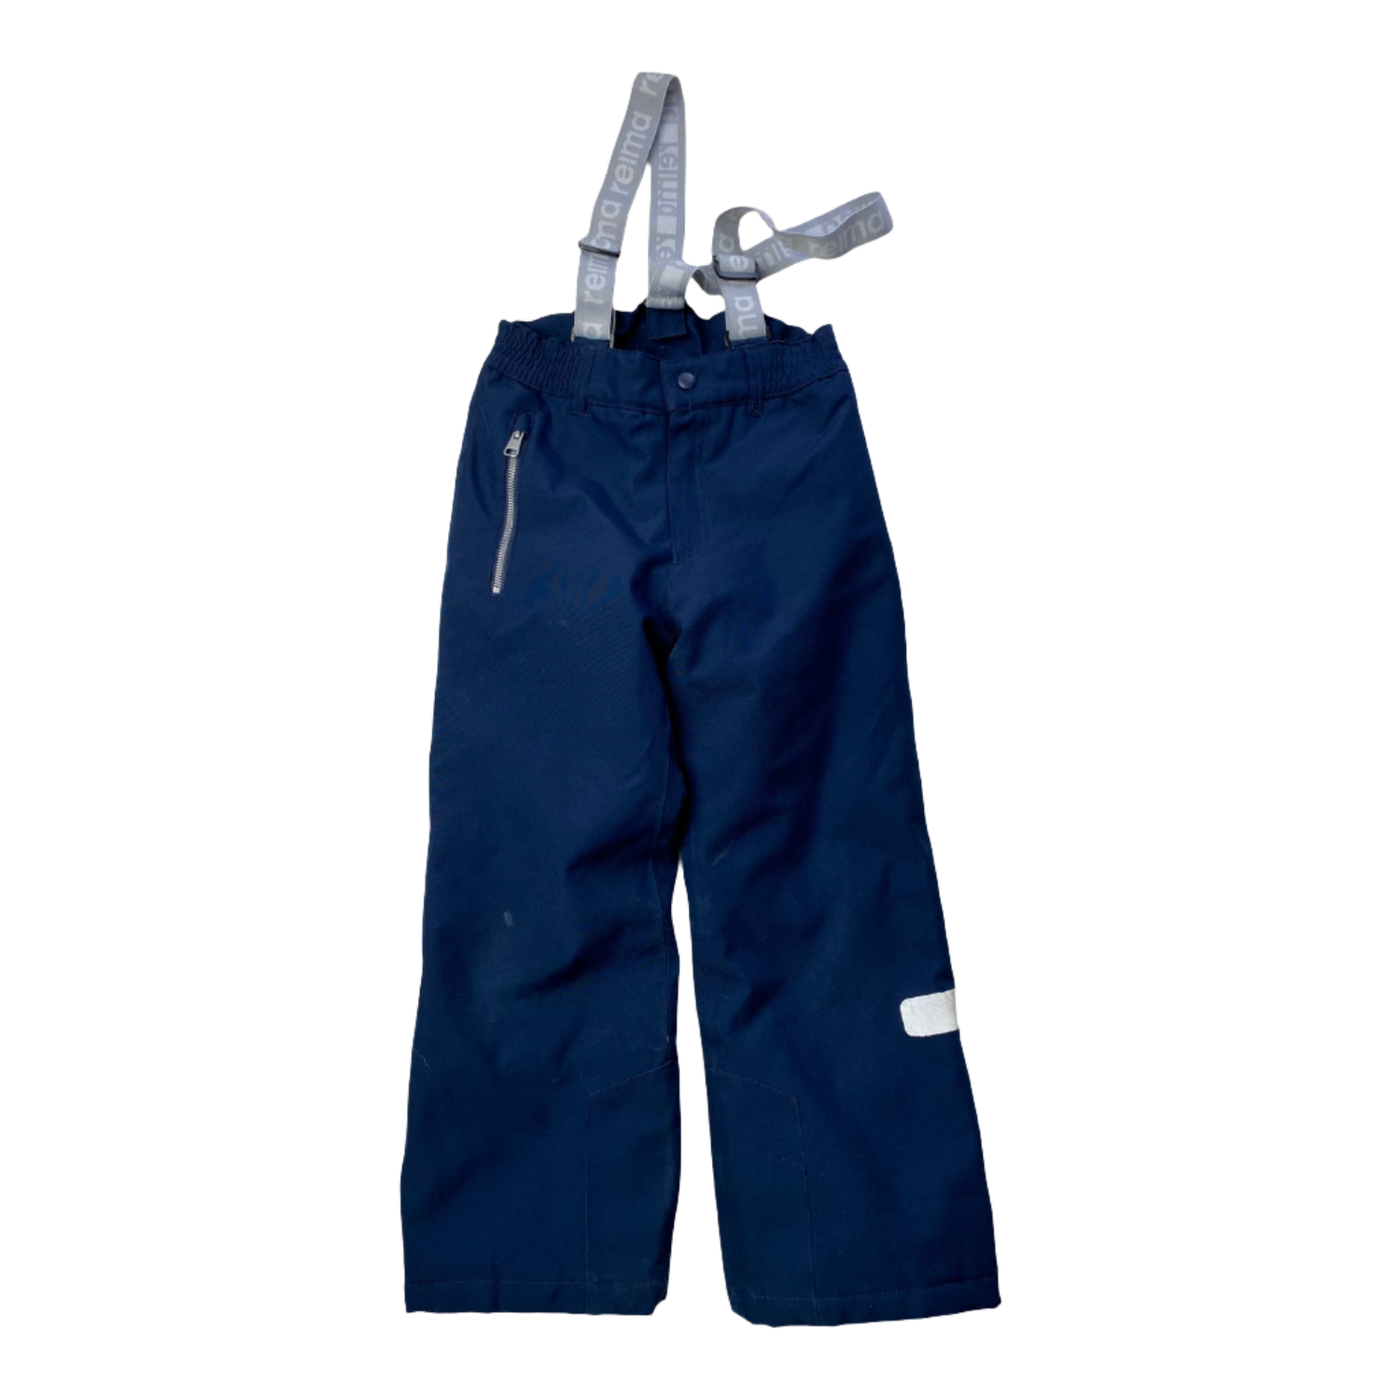 Reima winter outdoor pants, midnight blue | 128cm